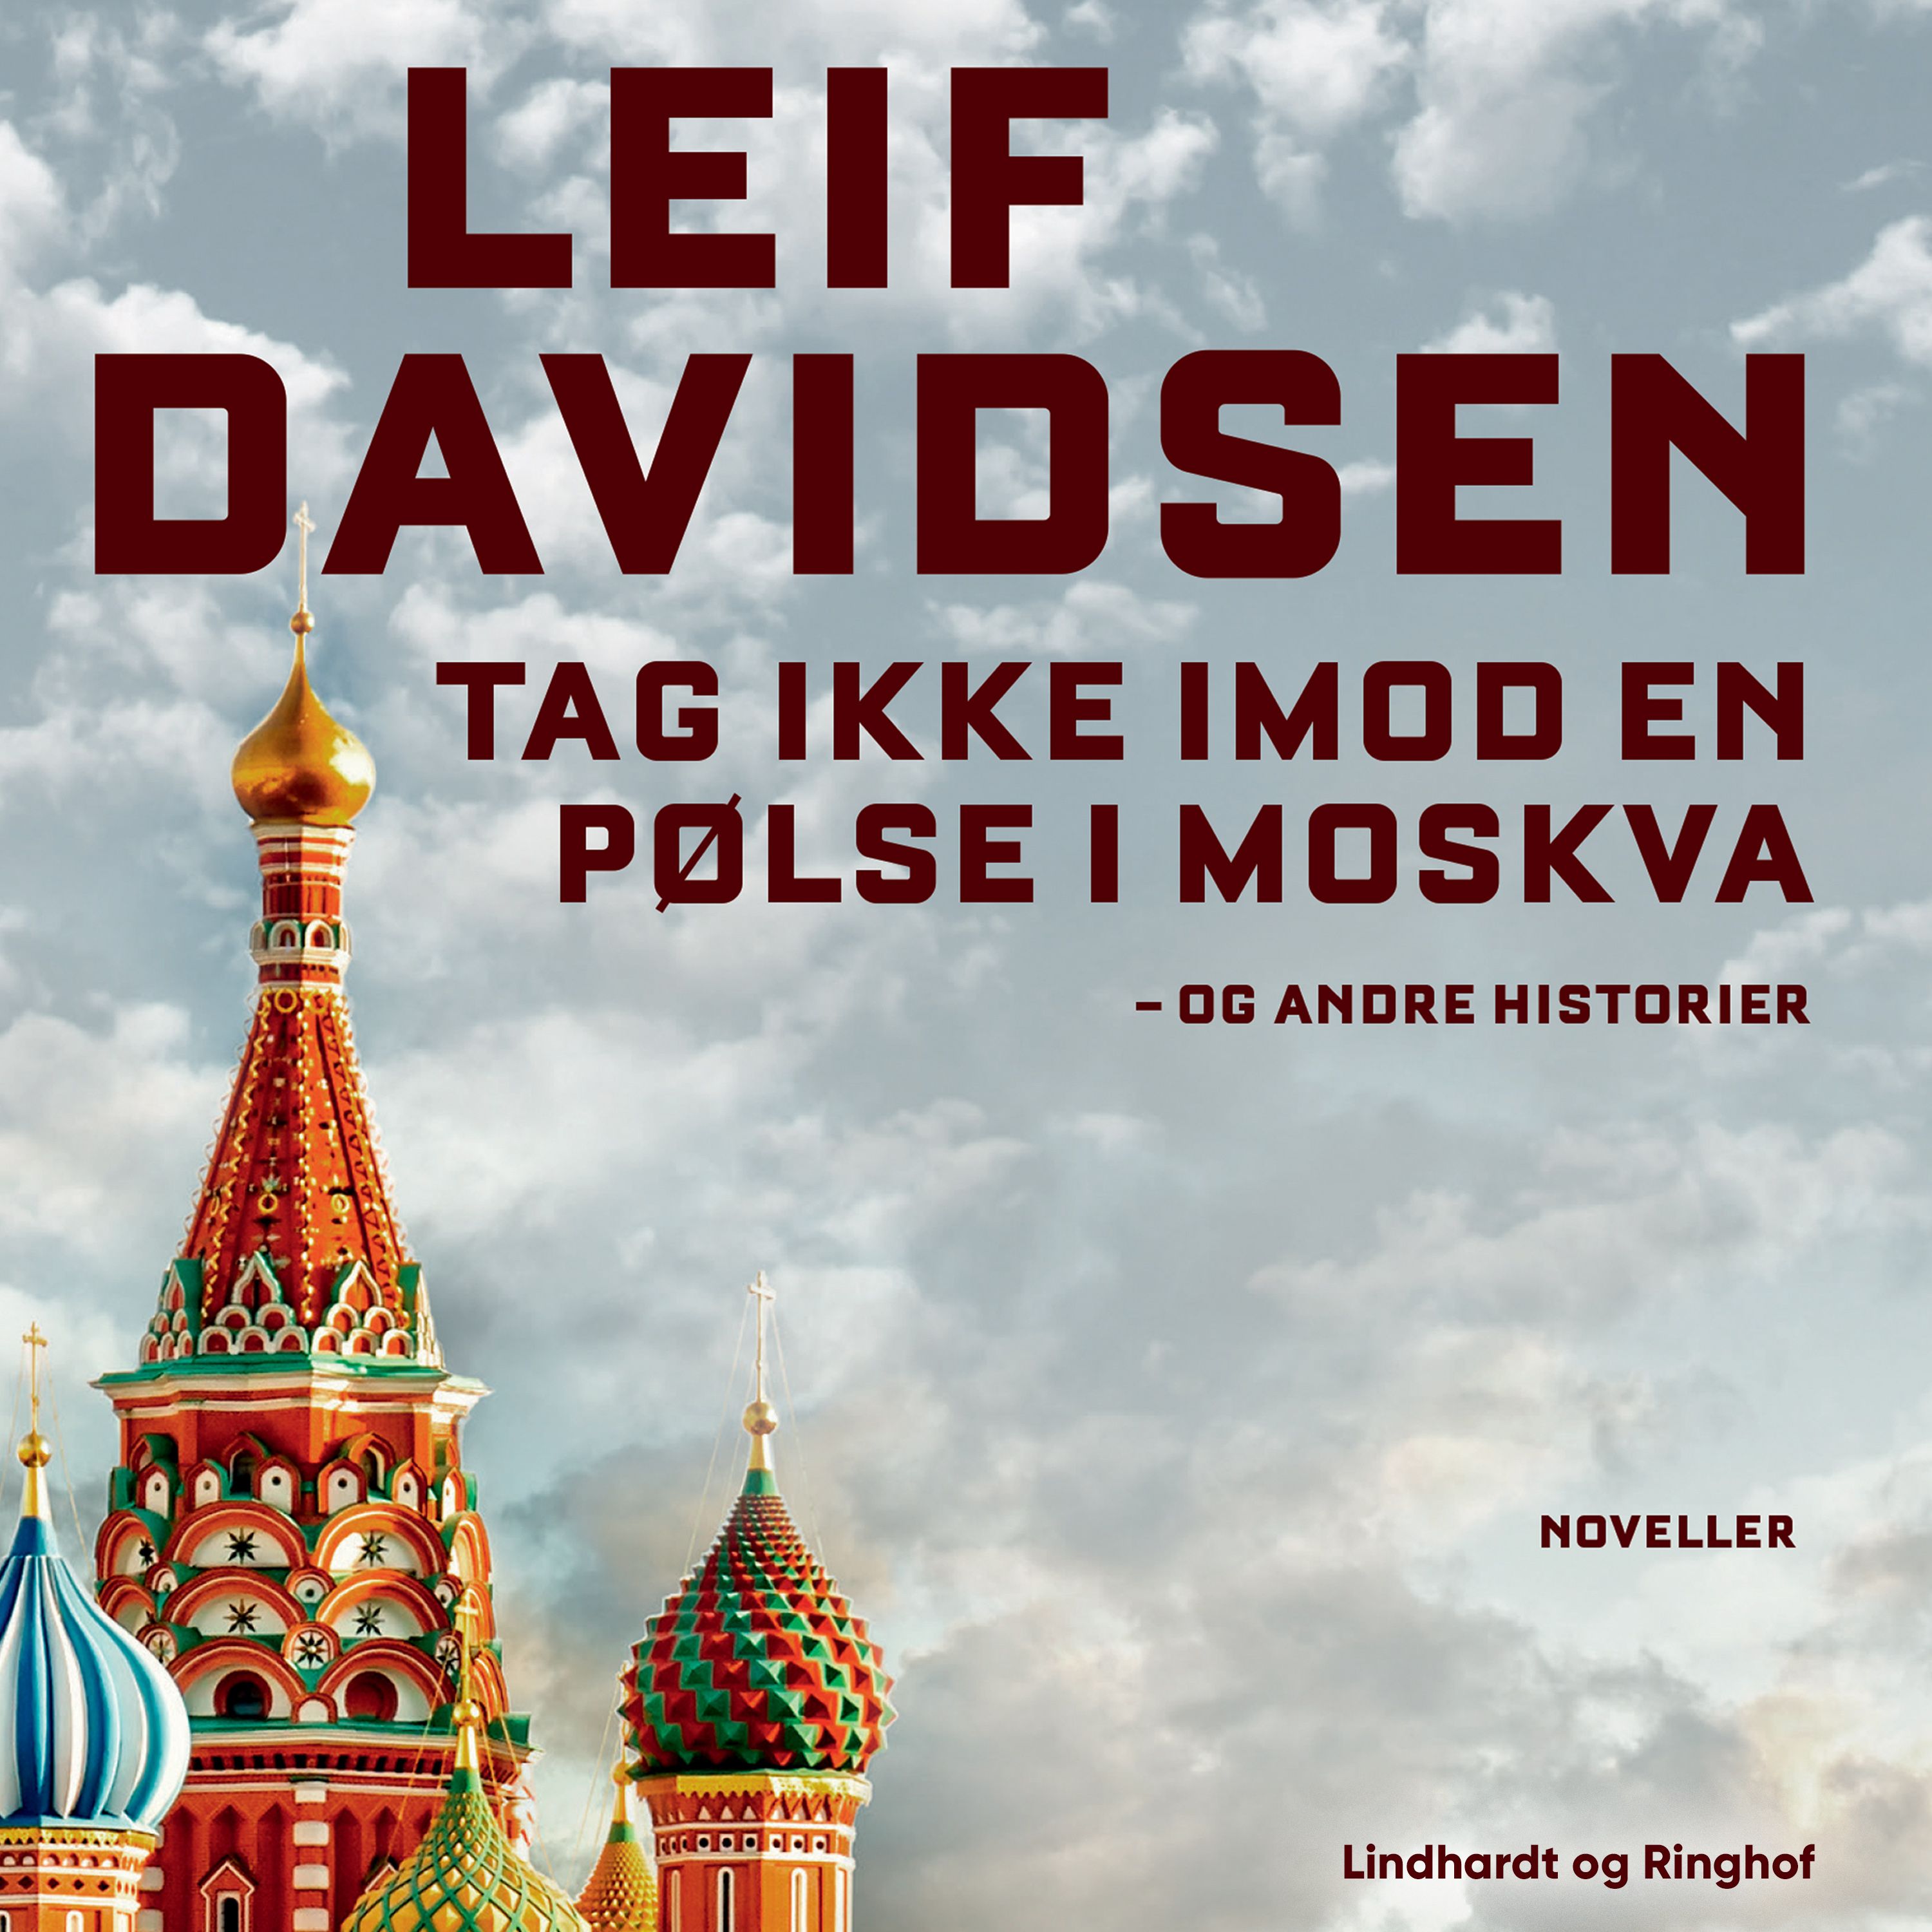 Tag ikke imod en pølse i Moskva - og andre historier, ljudbok av Leif Davidsen